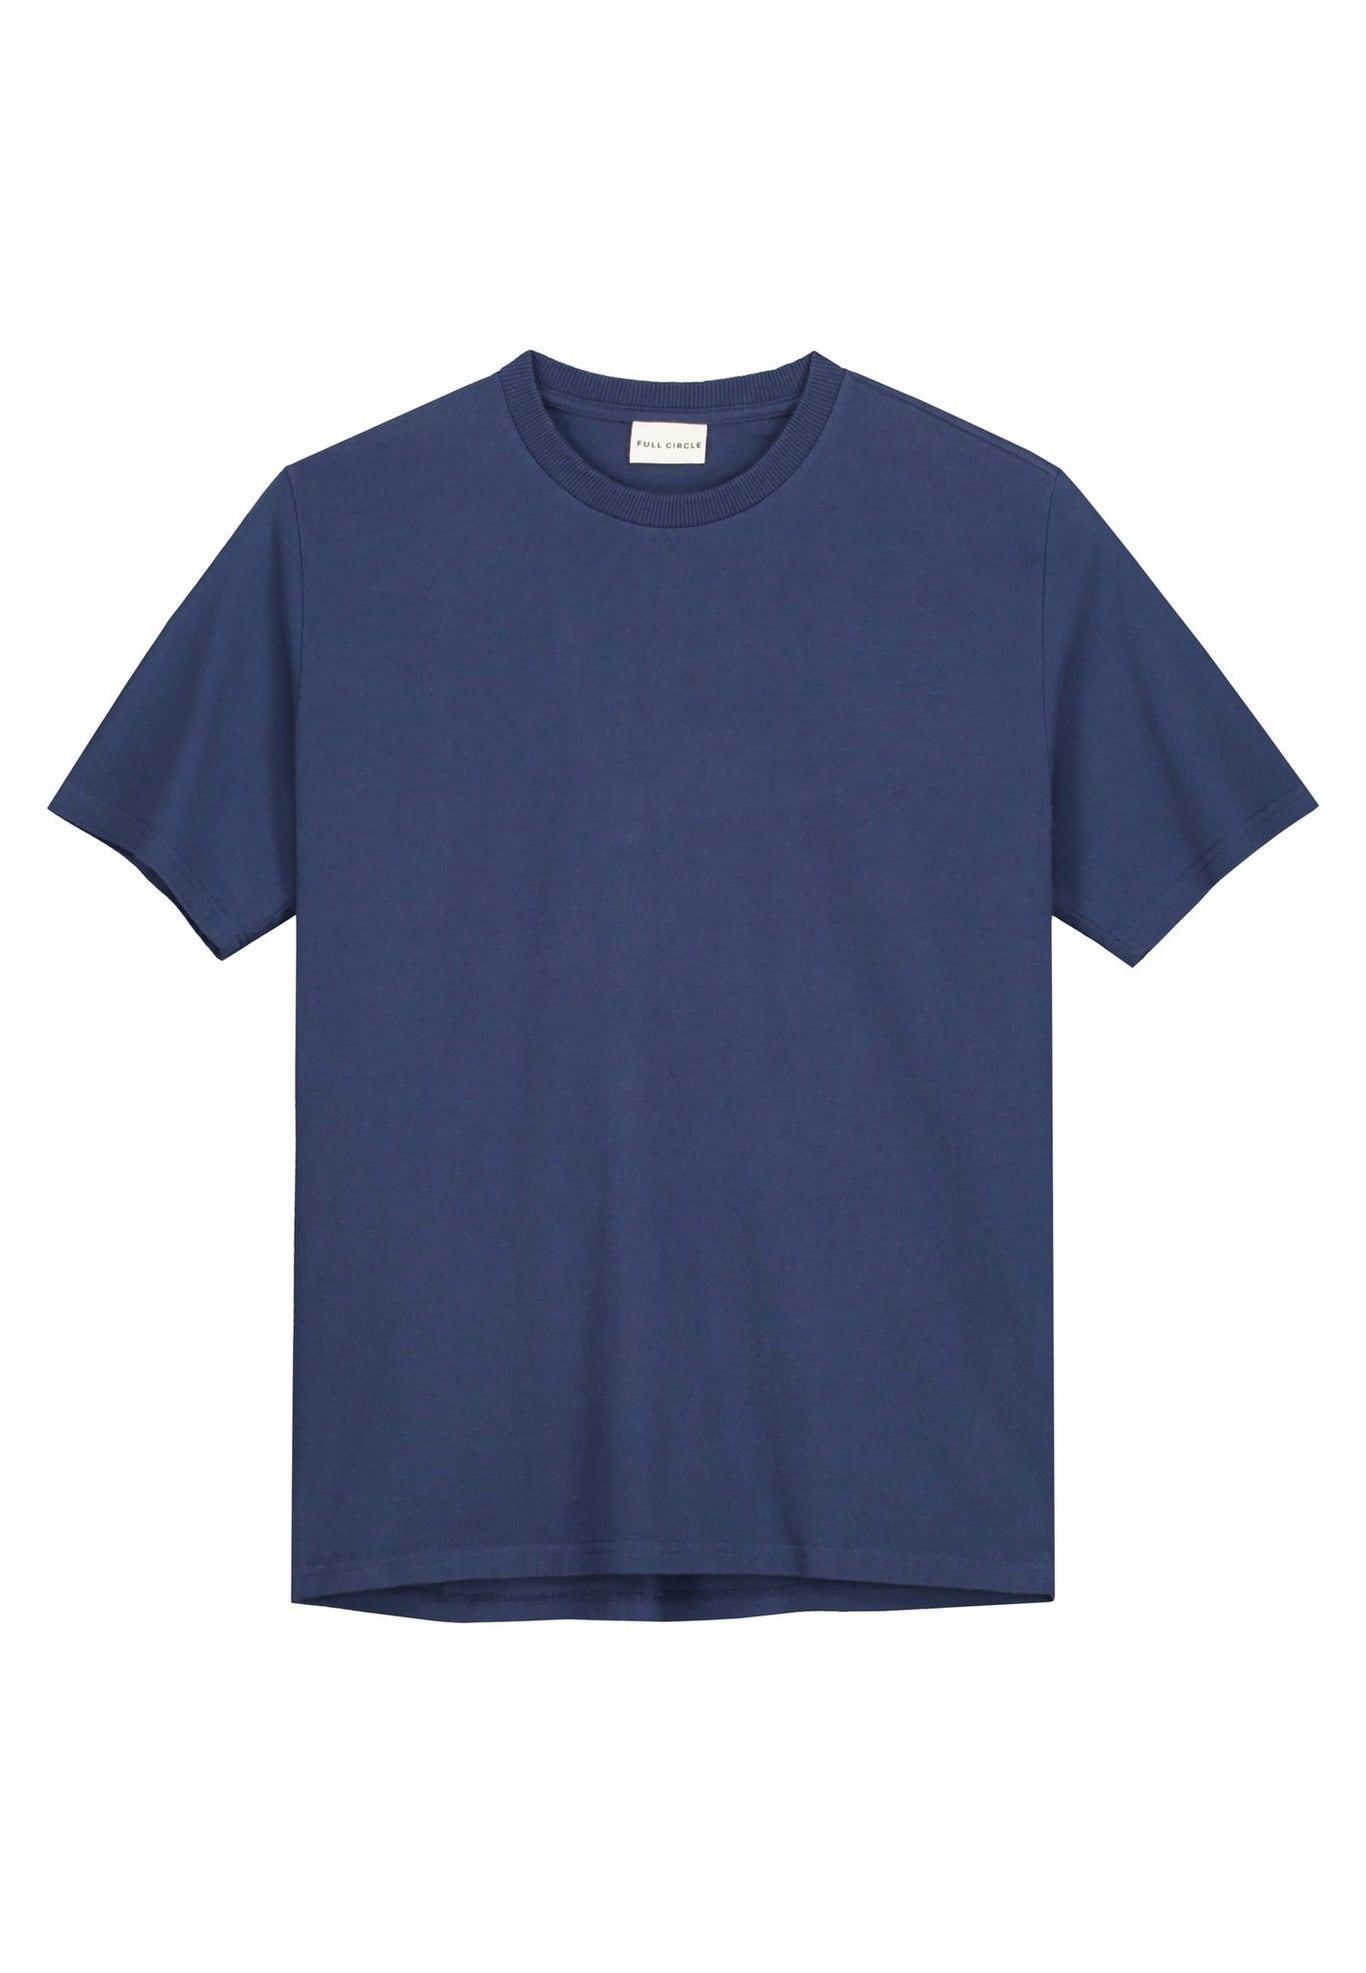 Full Circle Navy T-Shirt